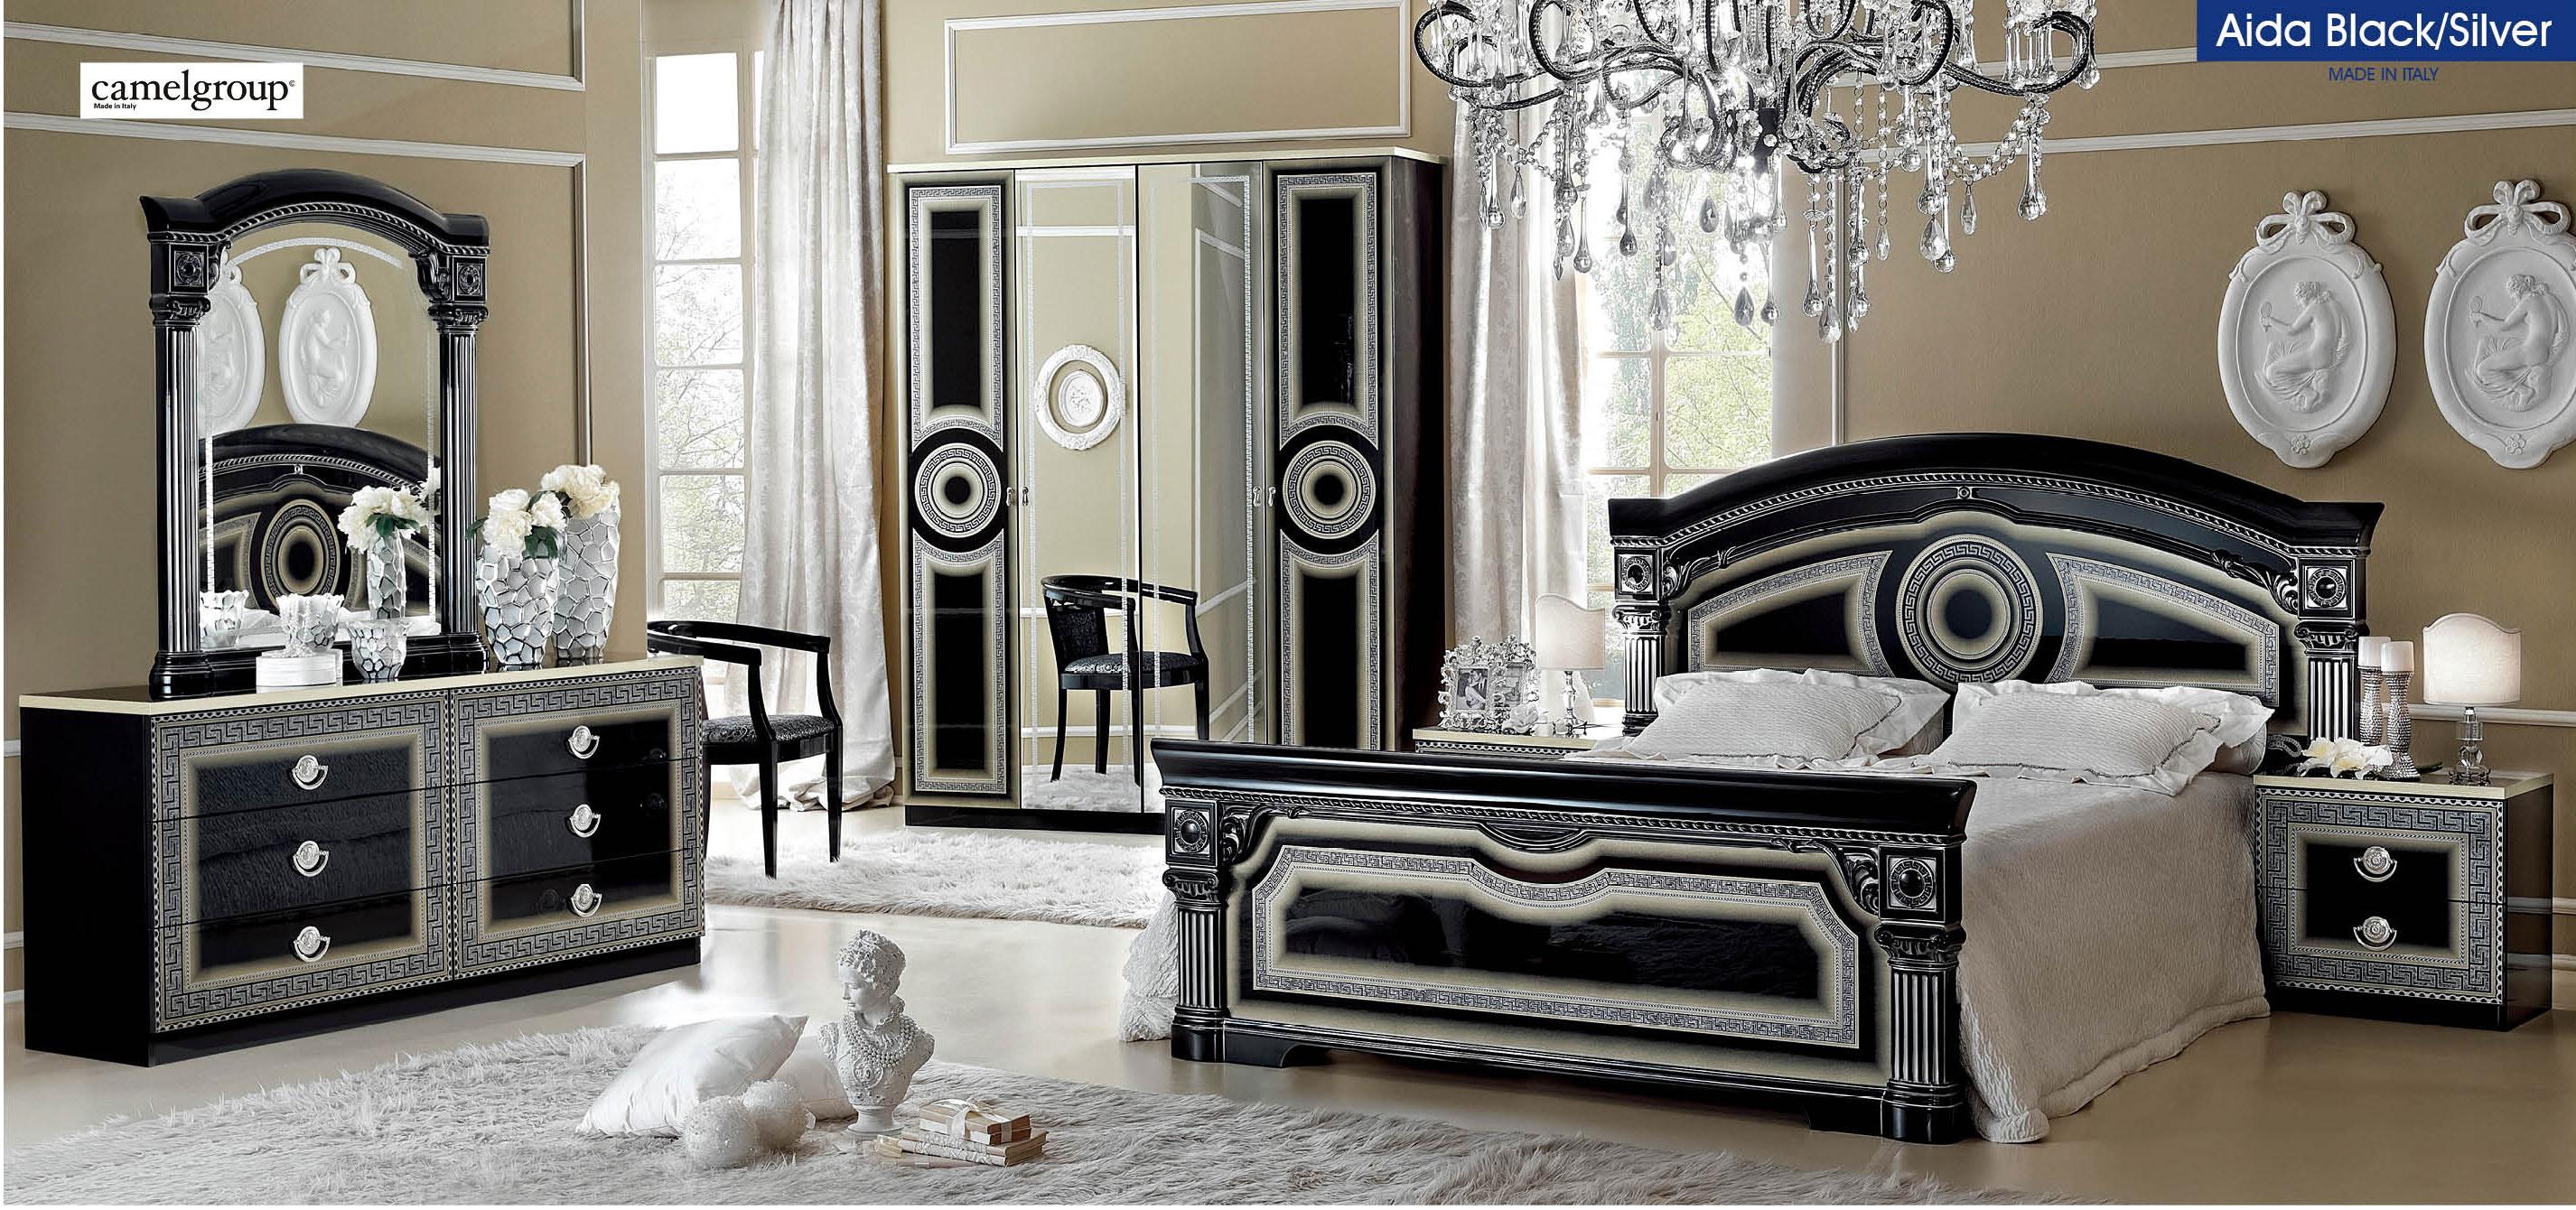 

    
ESF-Aida Black-Silver-Q-N-2PC ESF Panel Bedroom Set
